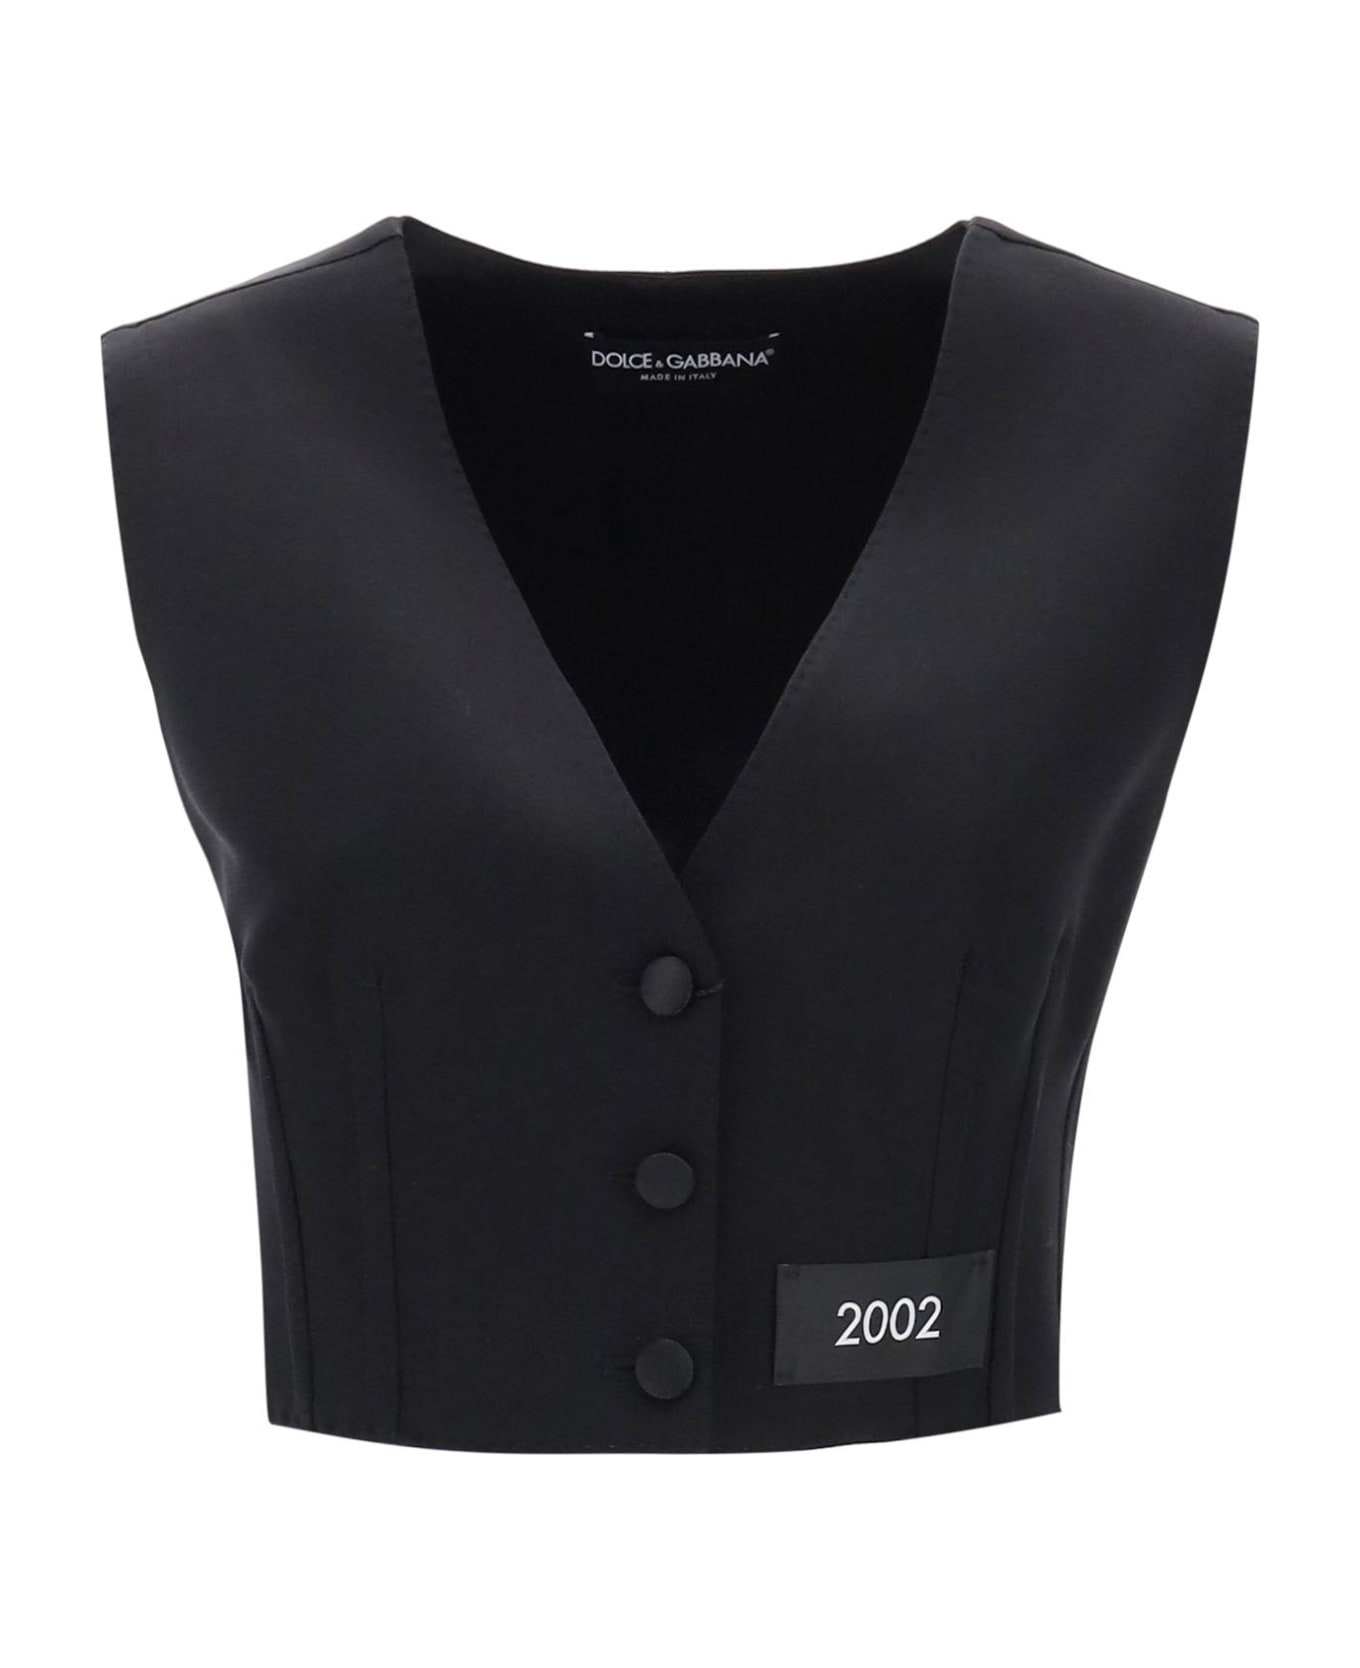 Dolce & Gabbana Tailoring Waistcoat - NERO (Black)